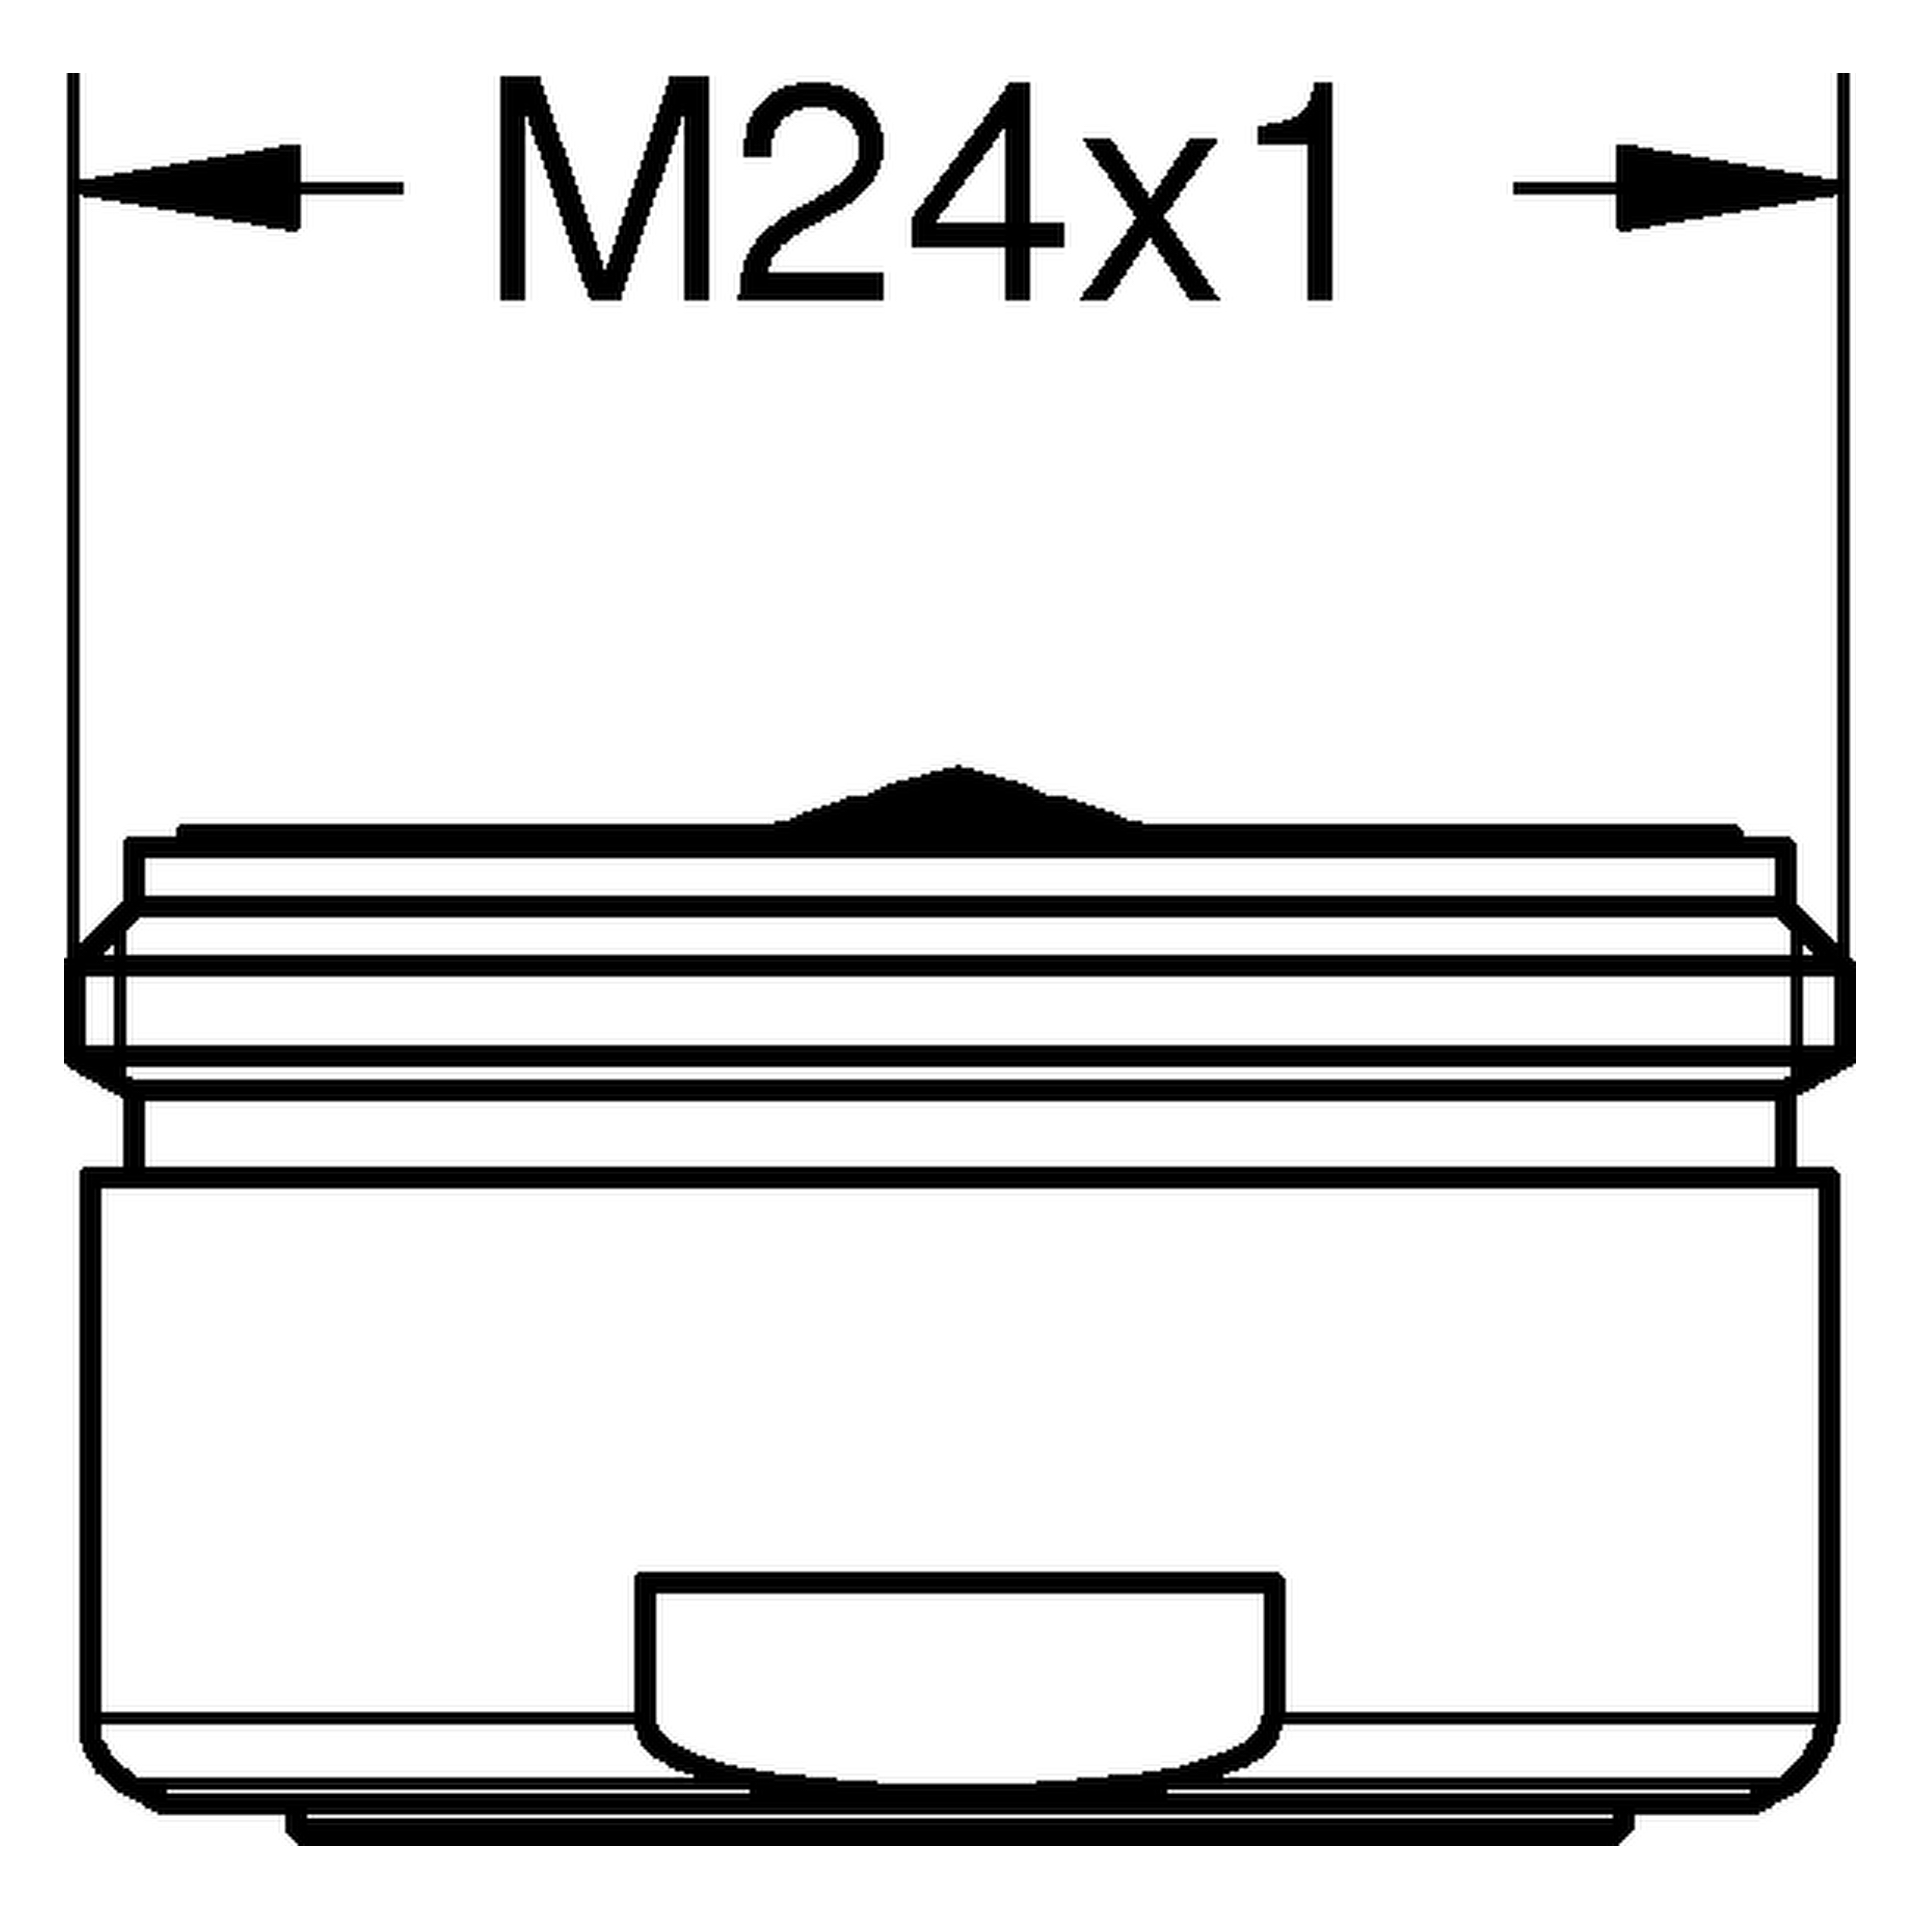 Mousseur 13941, Außengewinde, M 24 × 1, Durchflussklasse D, 34,8 - 37,8 l/min bei 3 bar, chrom